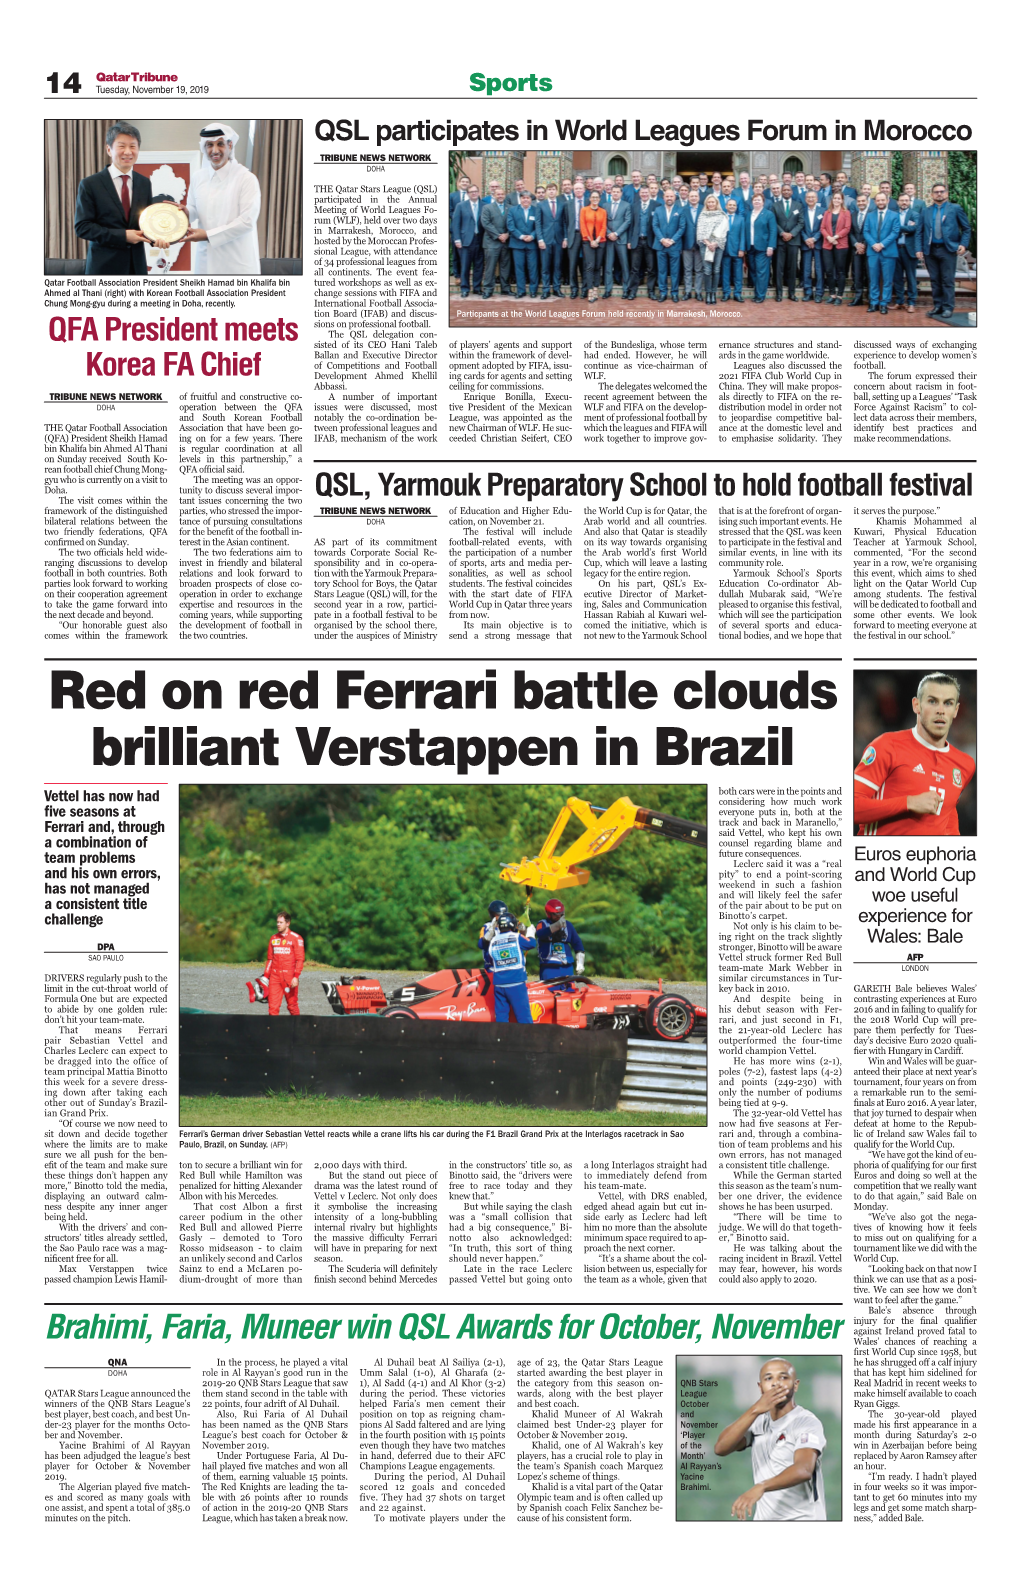 Red on Red Ferrari Battle Clouds Brilliant Verstappen in Brazil